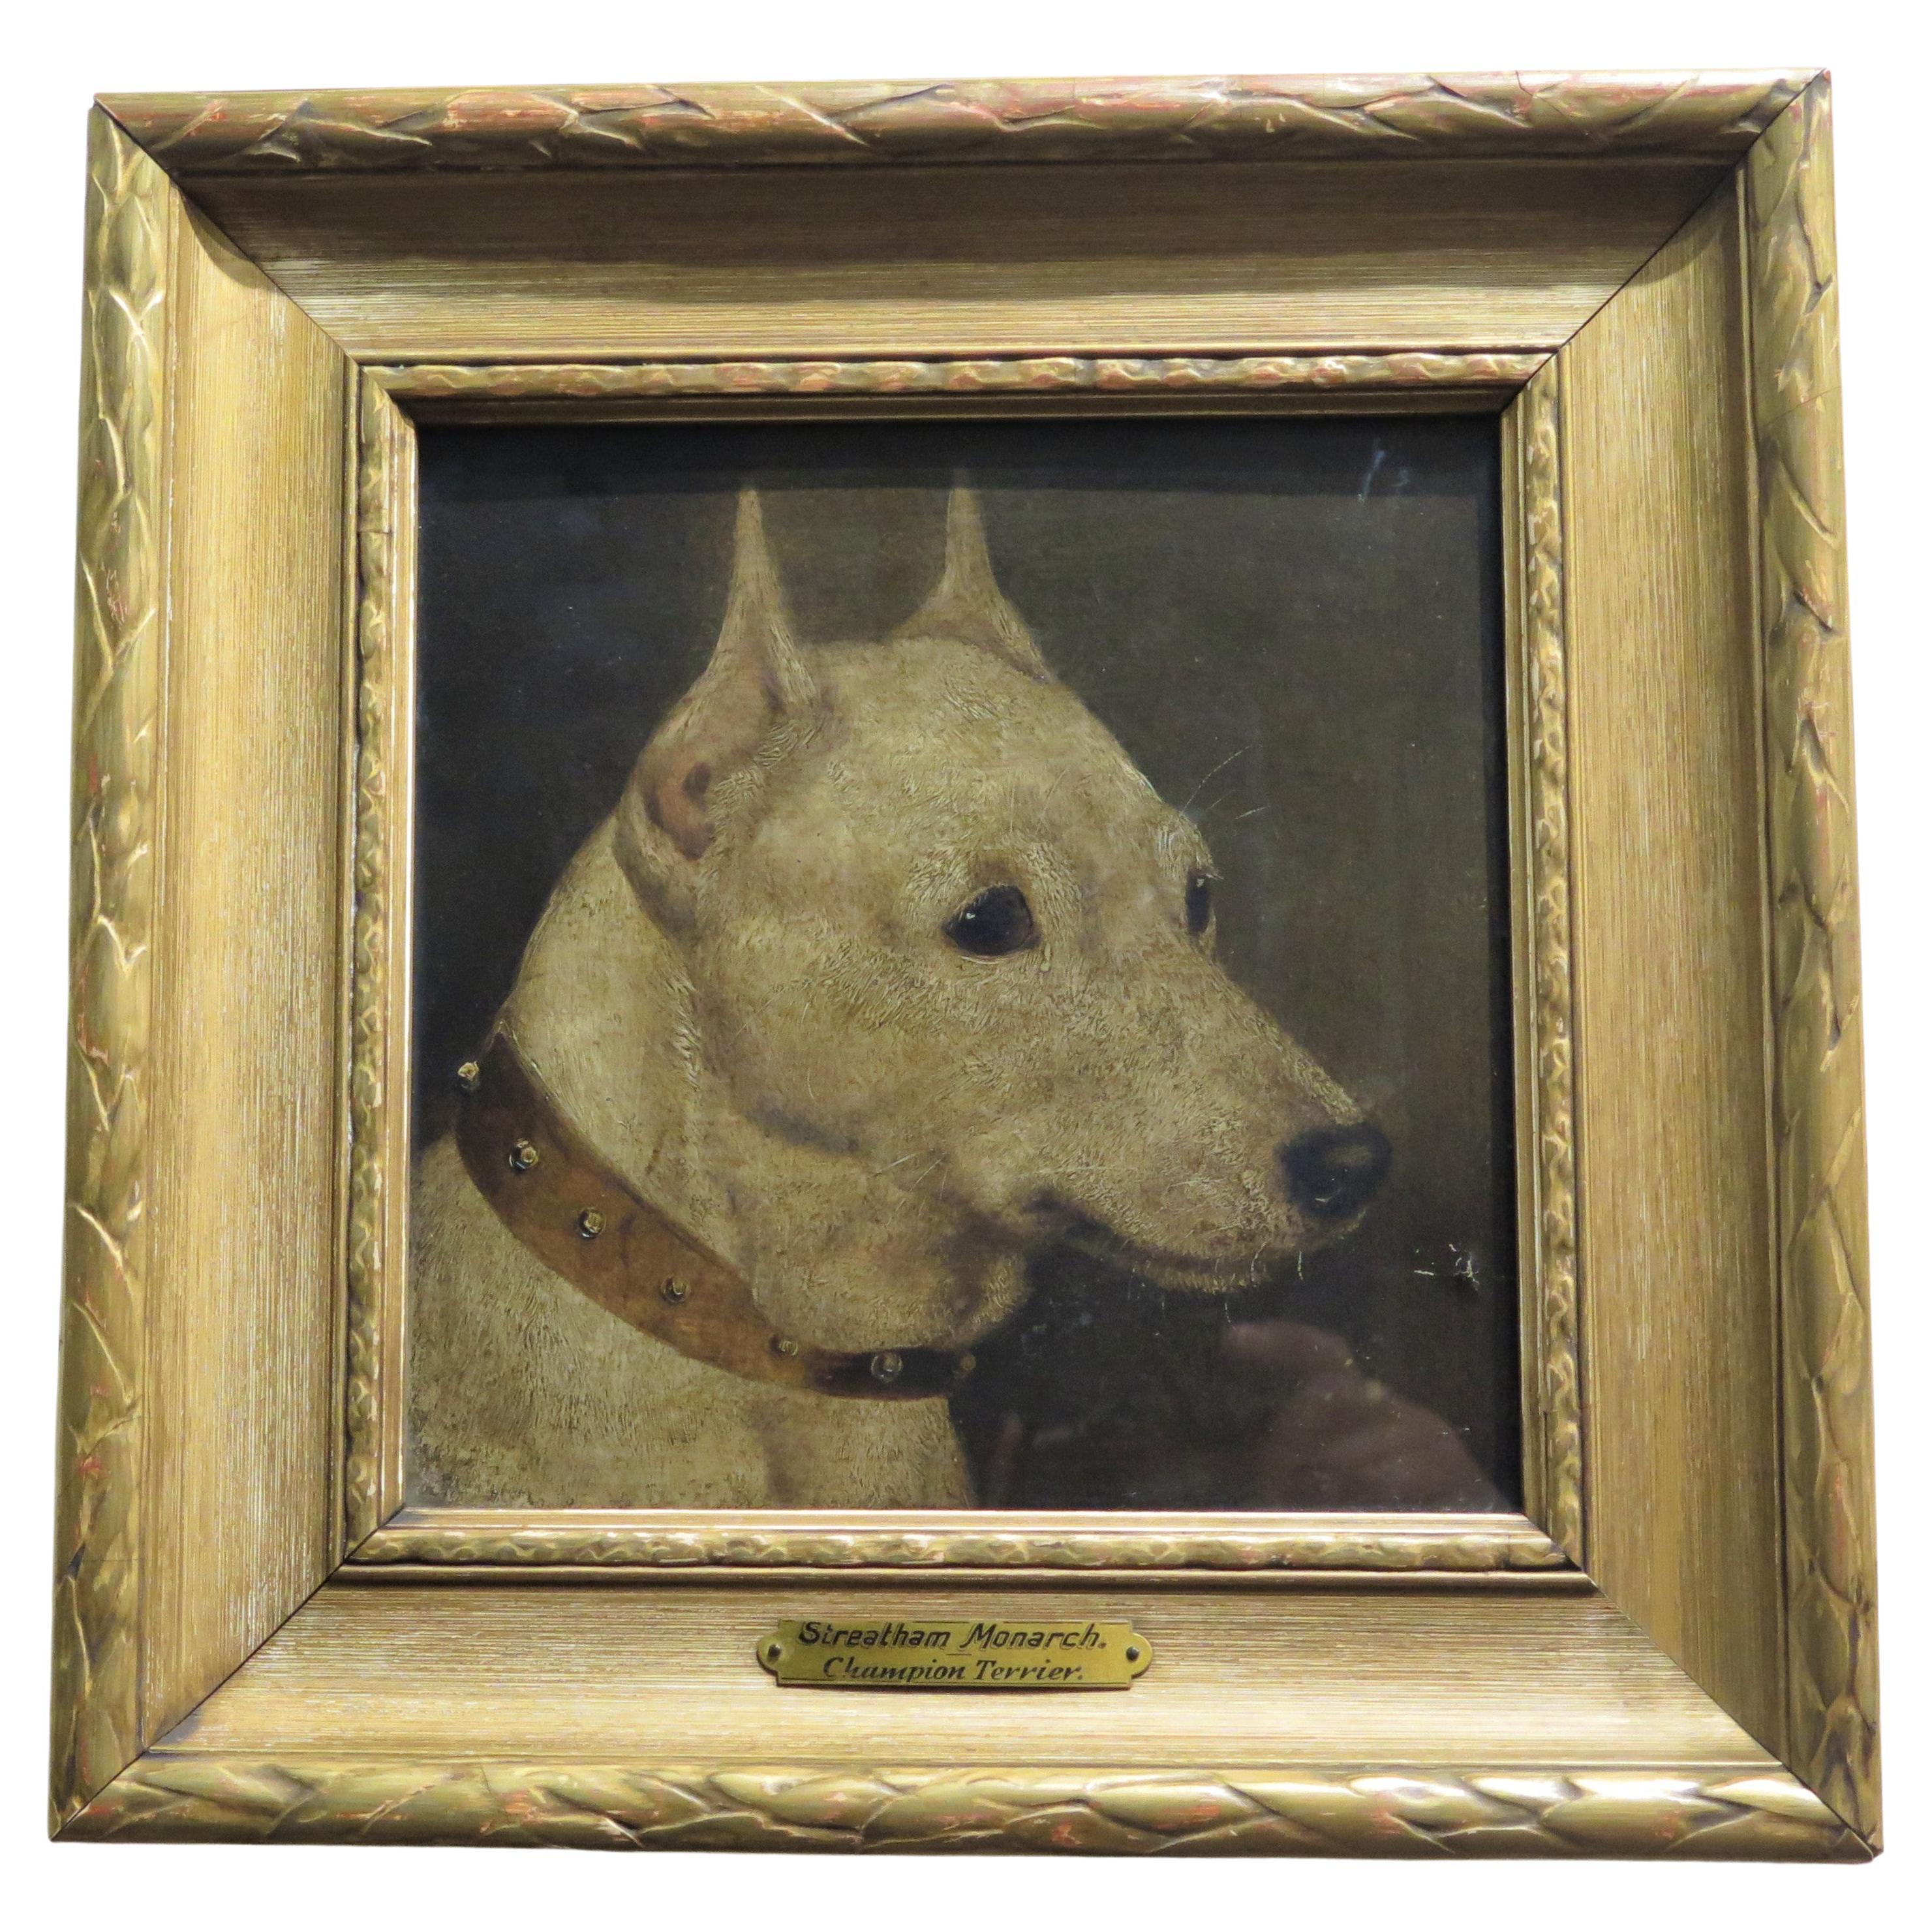 Terrier de champion « Streatham Monarch » d'Edward Aistrop (Angleterre, 1880-1920)